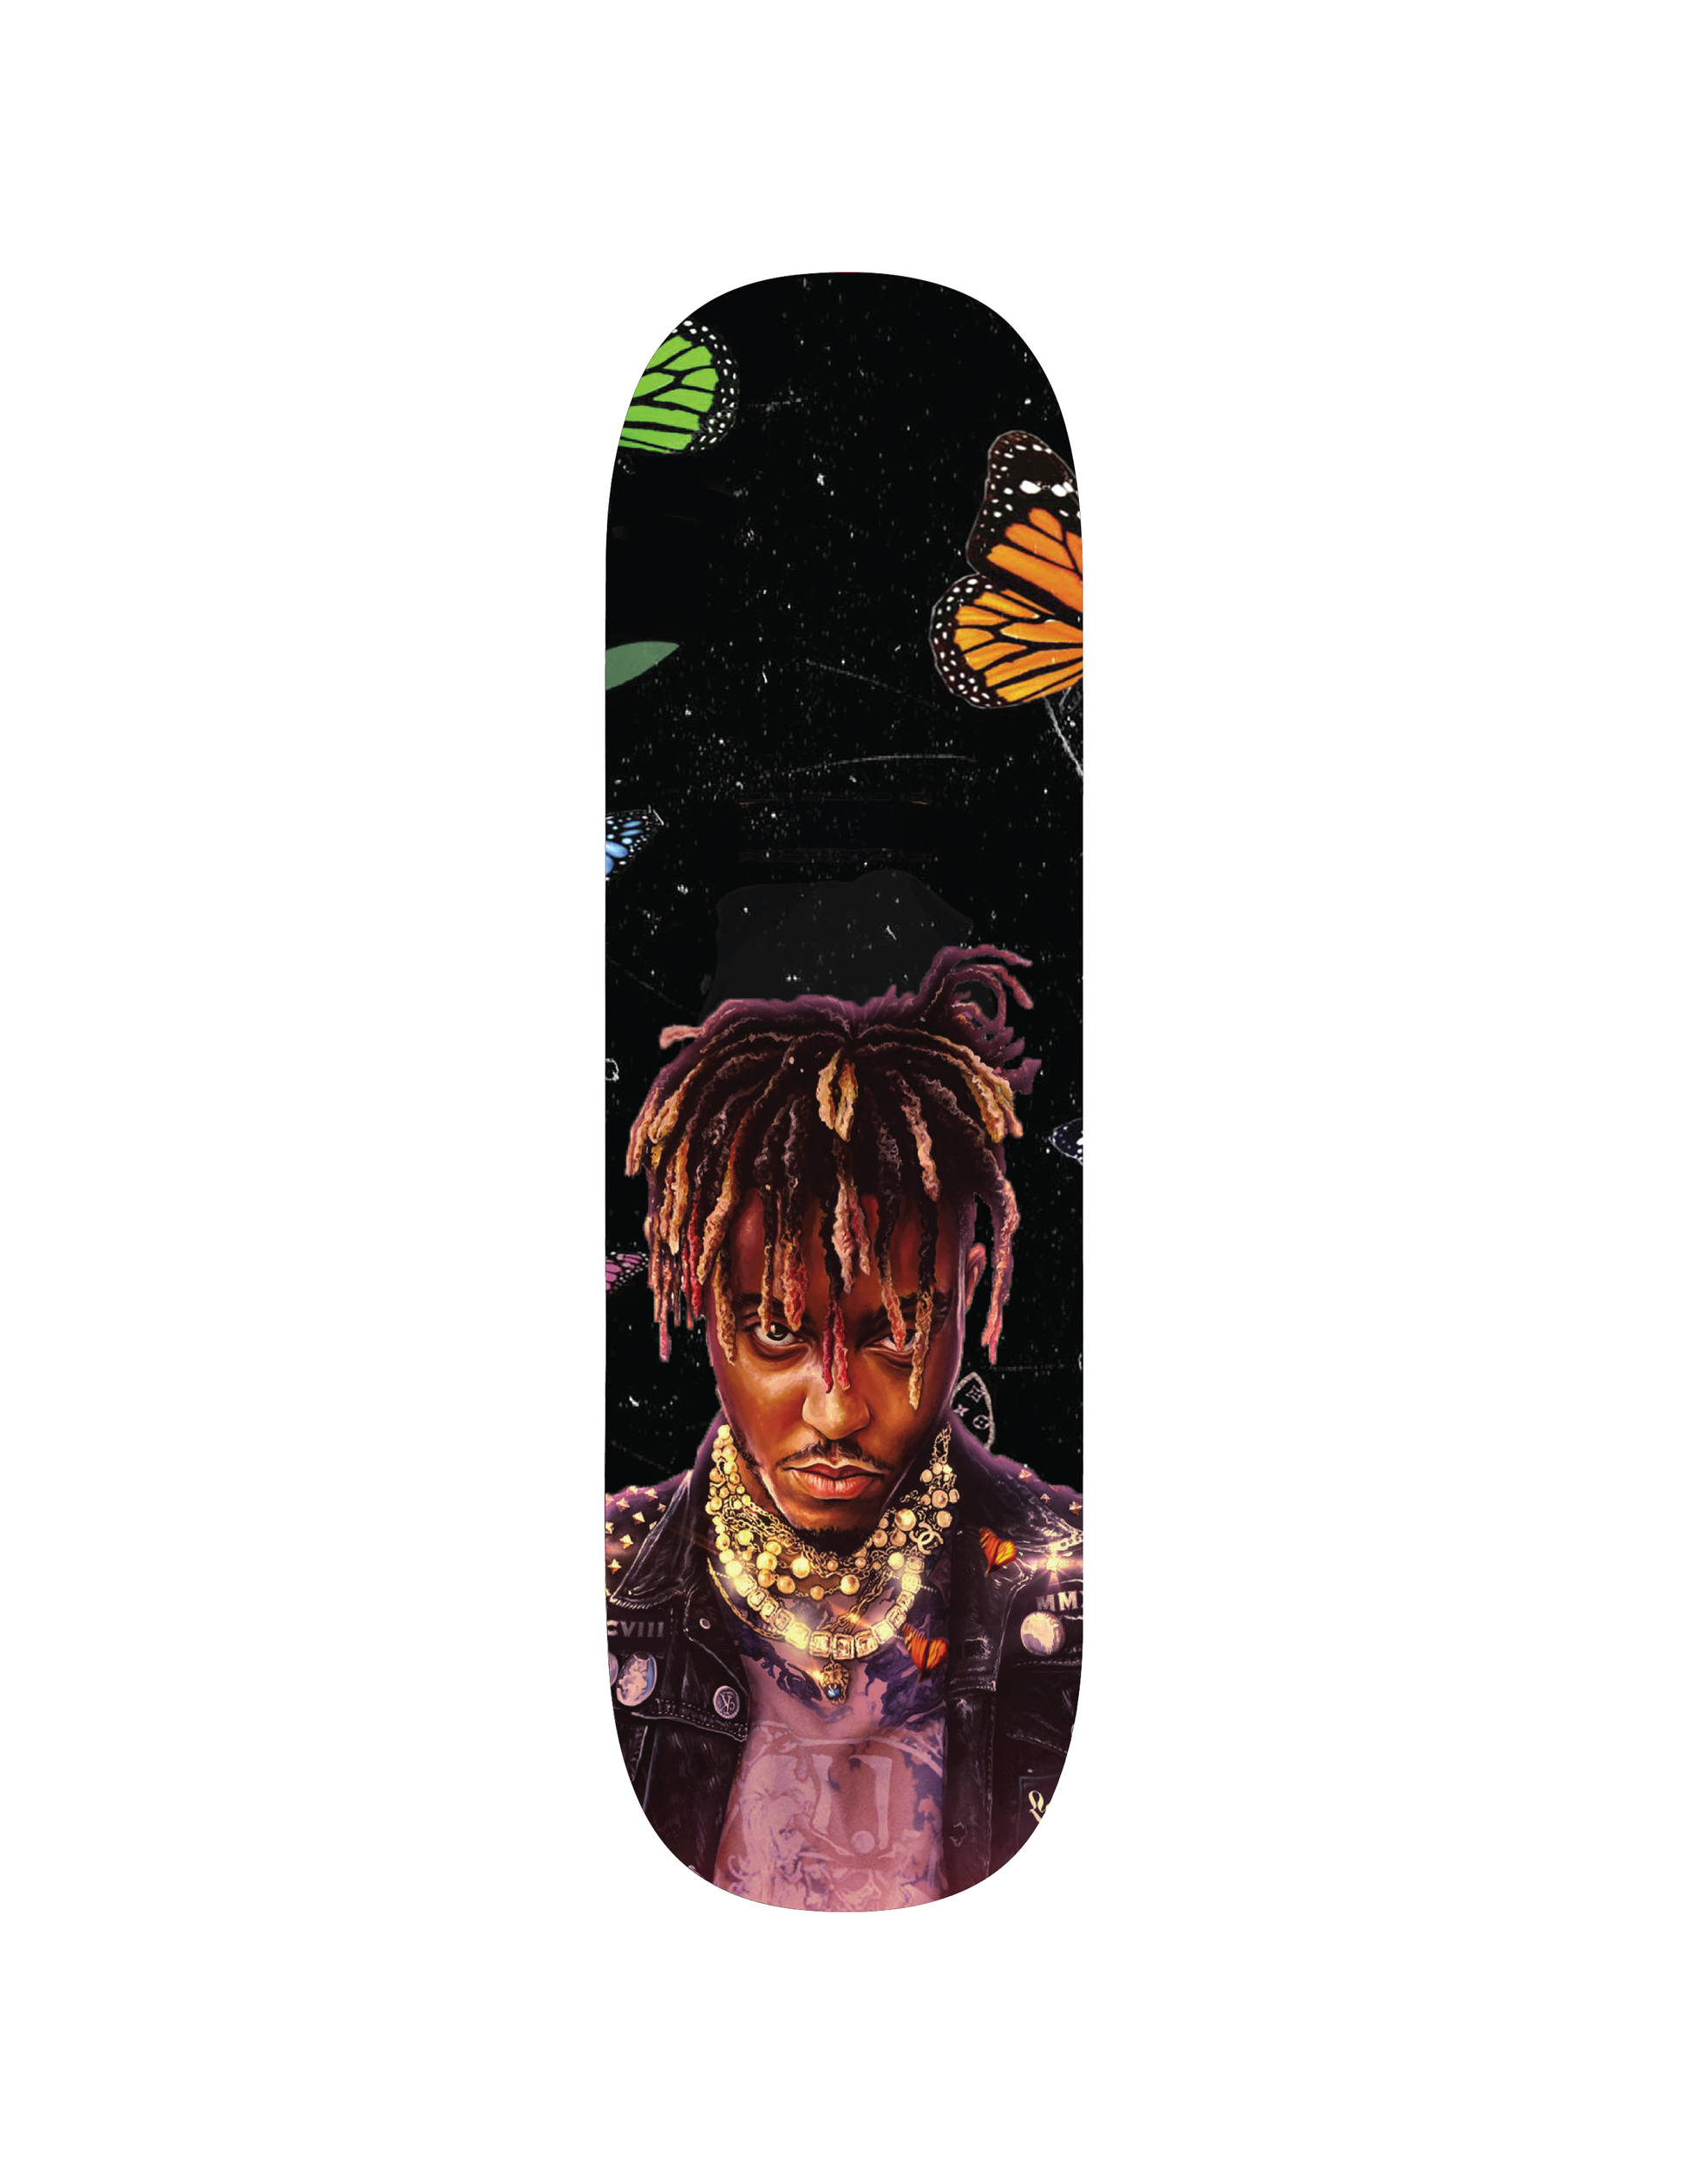 Juice WRLD Skateboard – ART BY MARCHESE